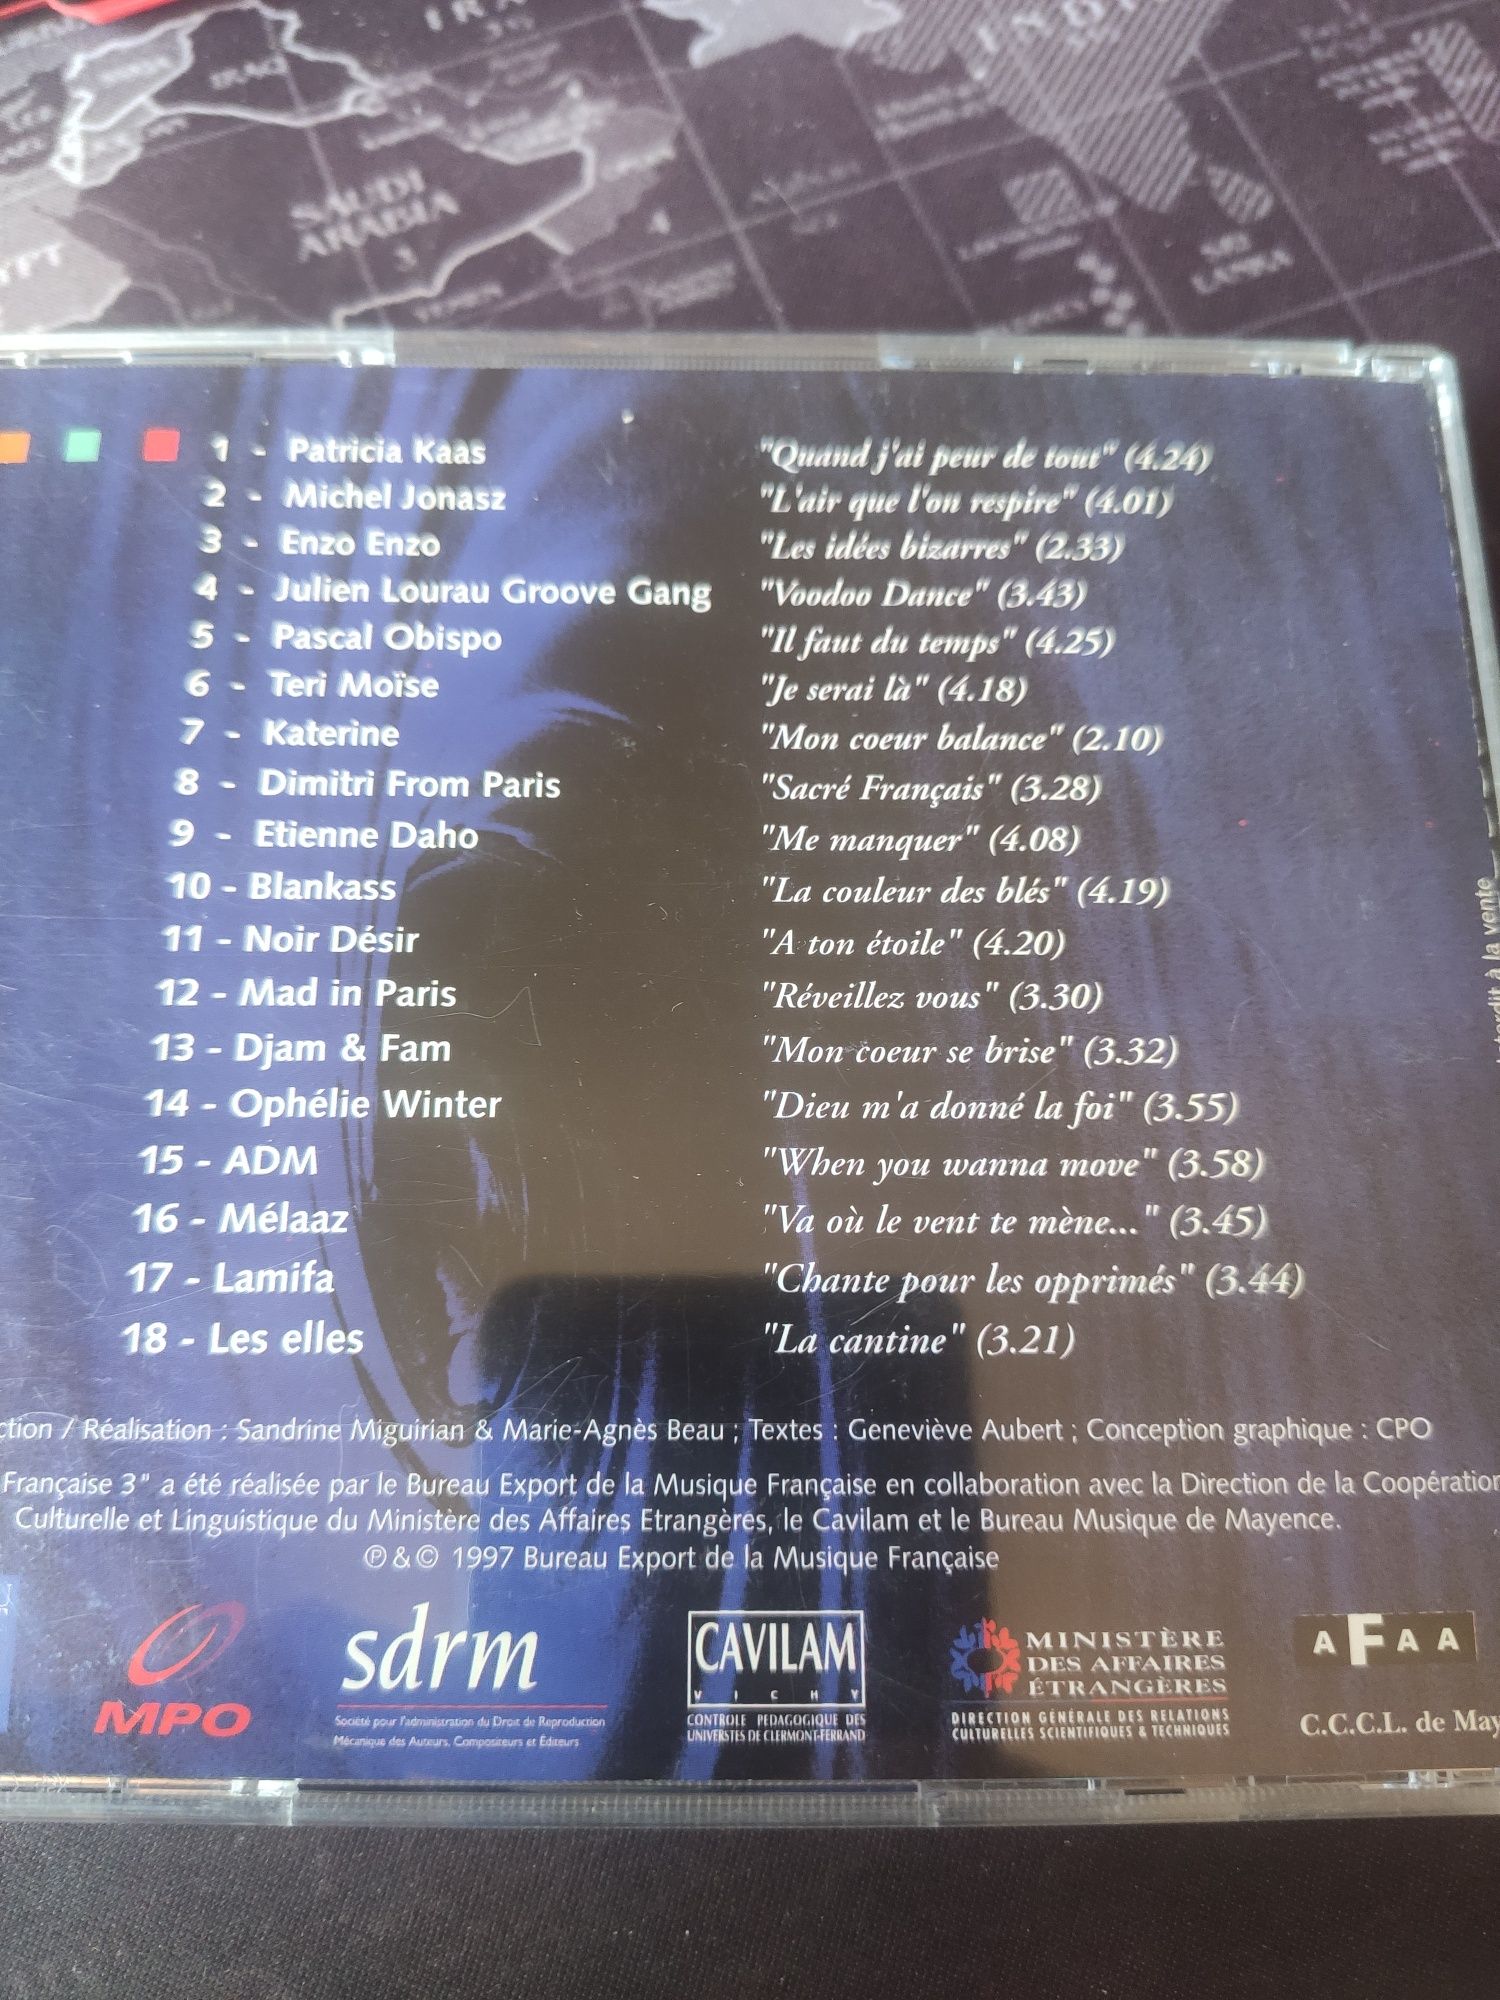 Generation Francaise CD muzyka francuska